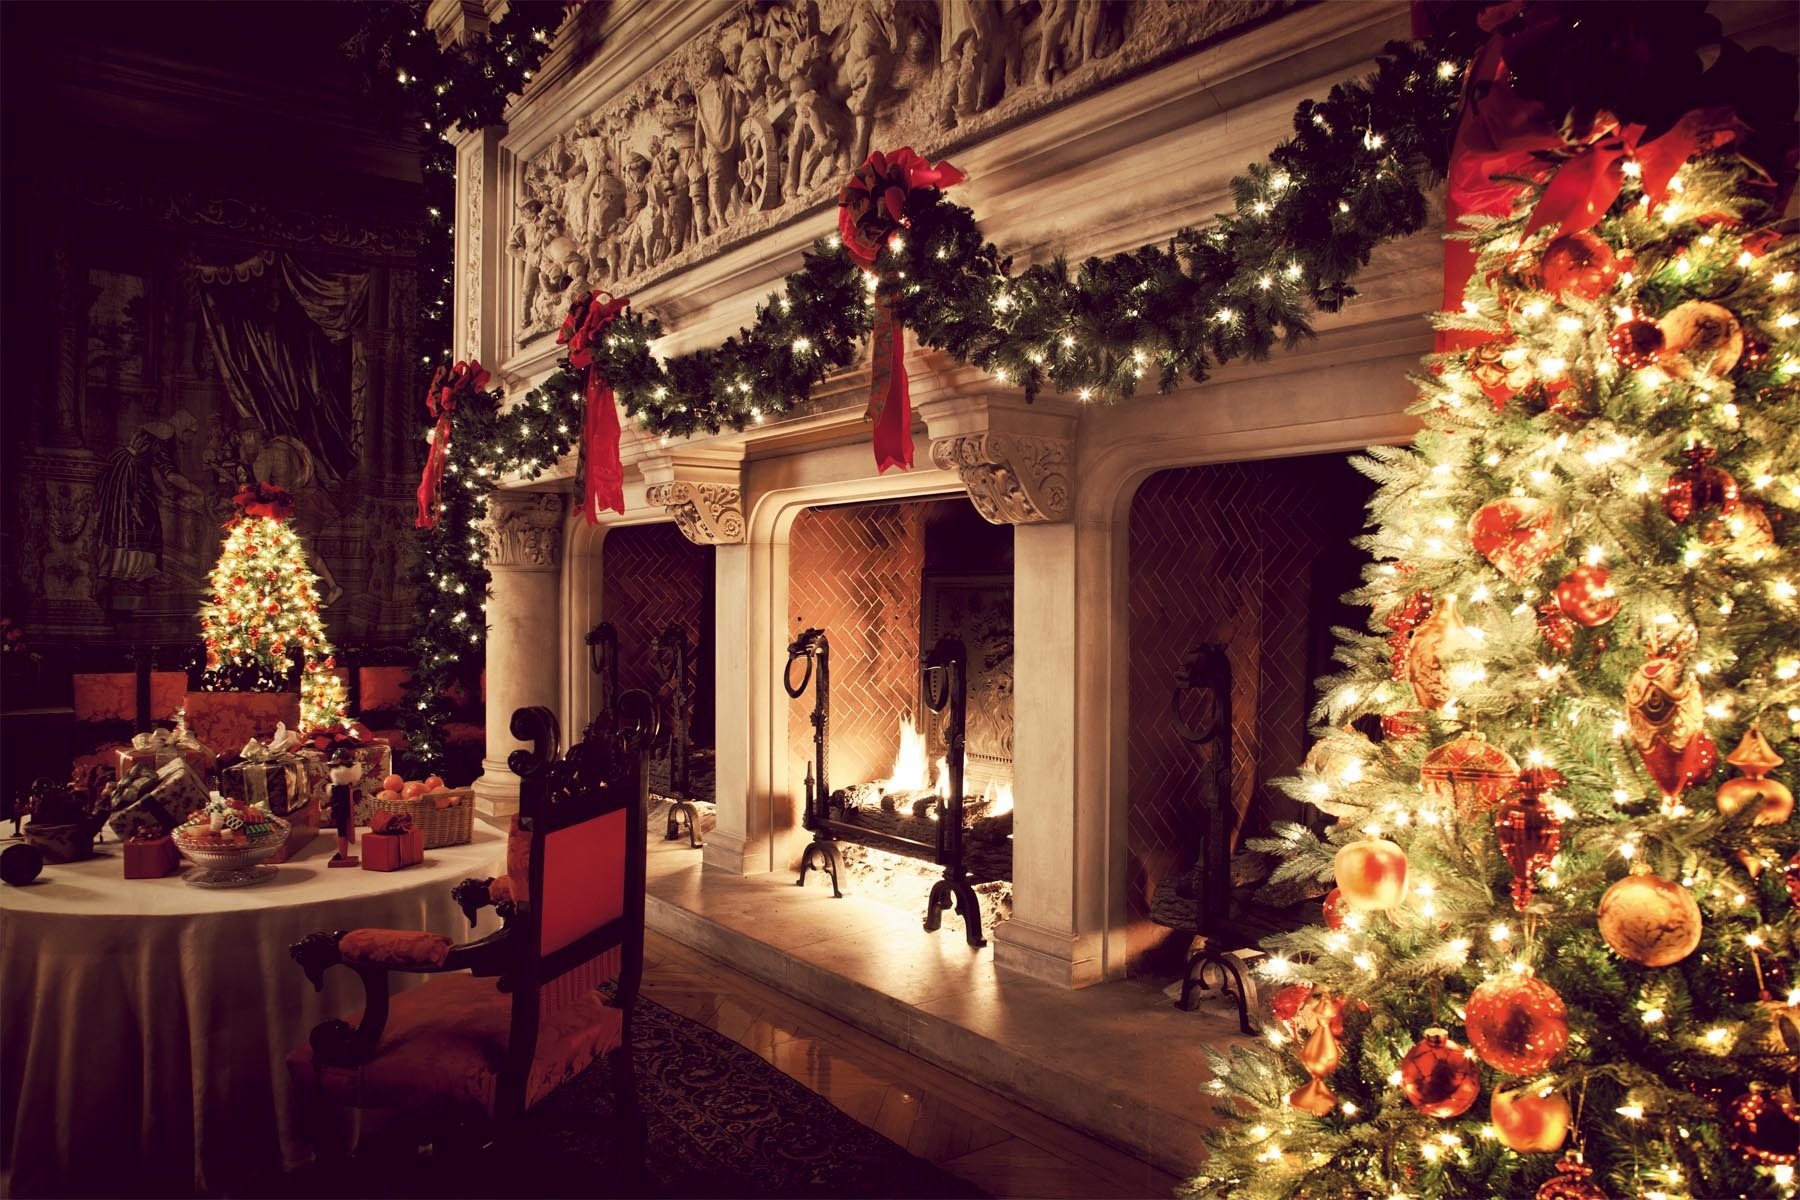 Biltmore Fireplace at Christmas | Skimbaco Lifestyle | online magazine